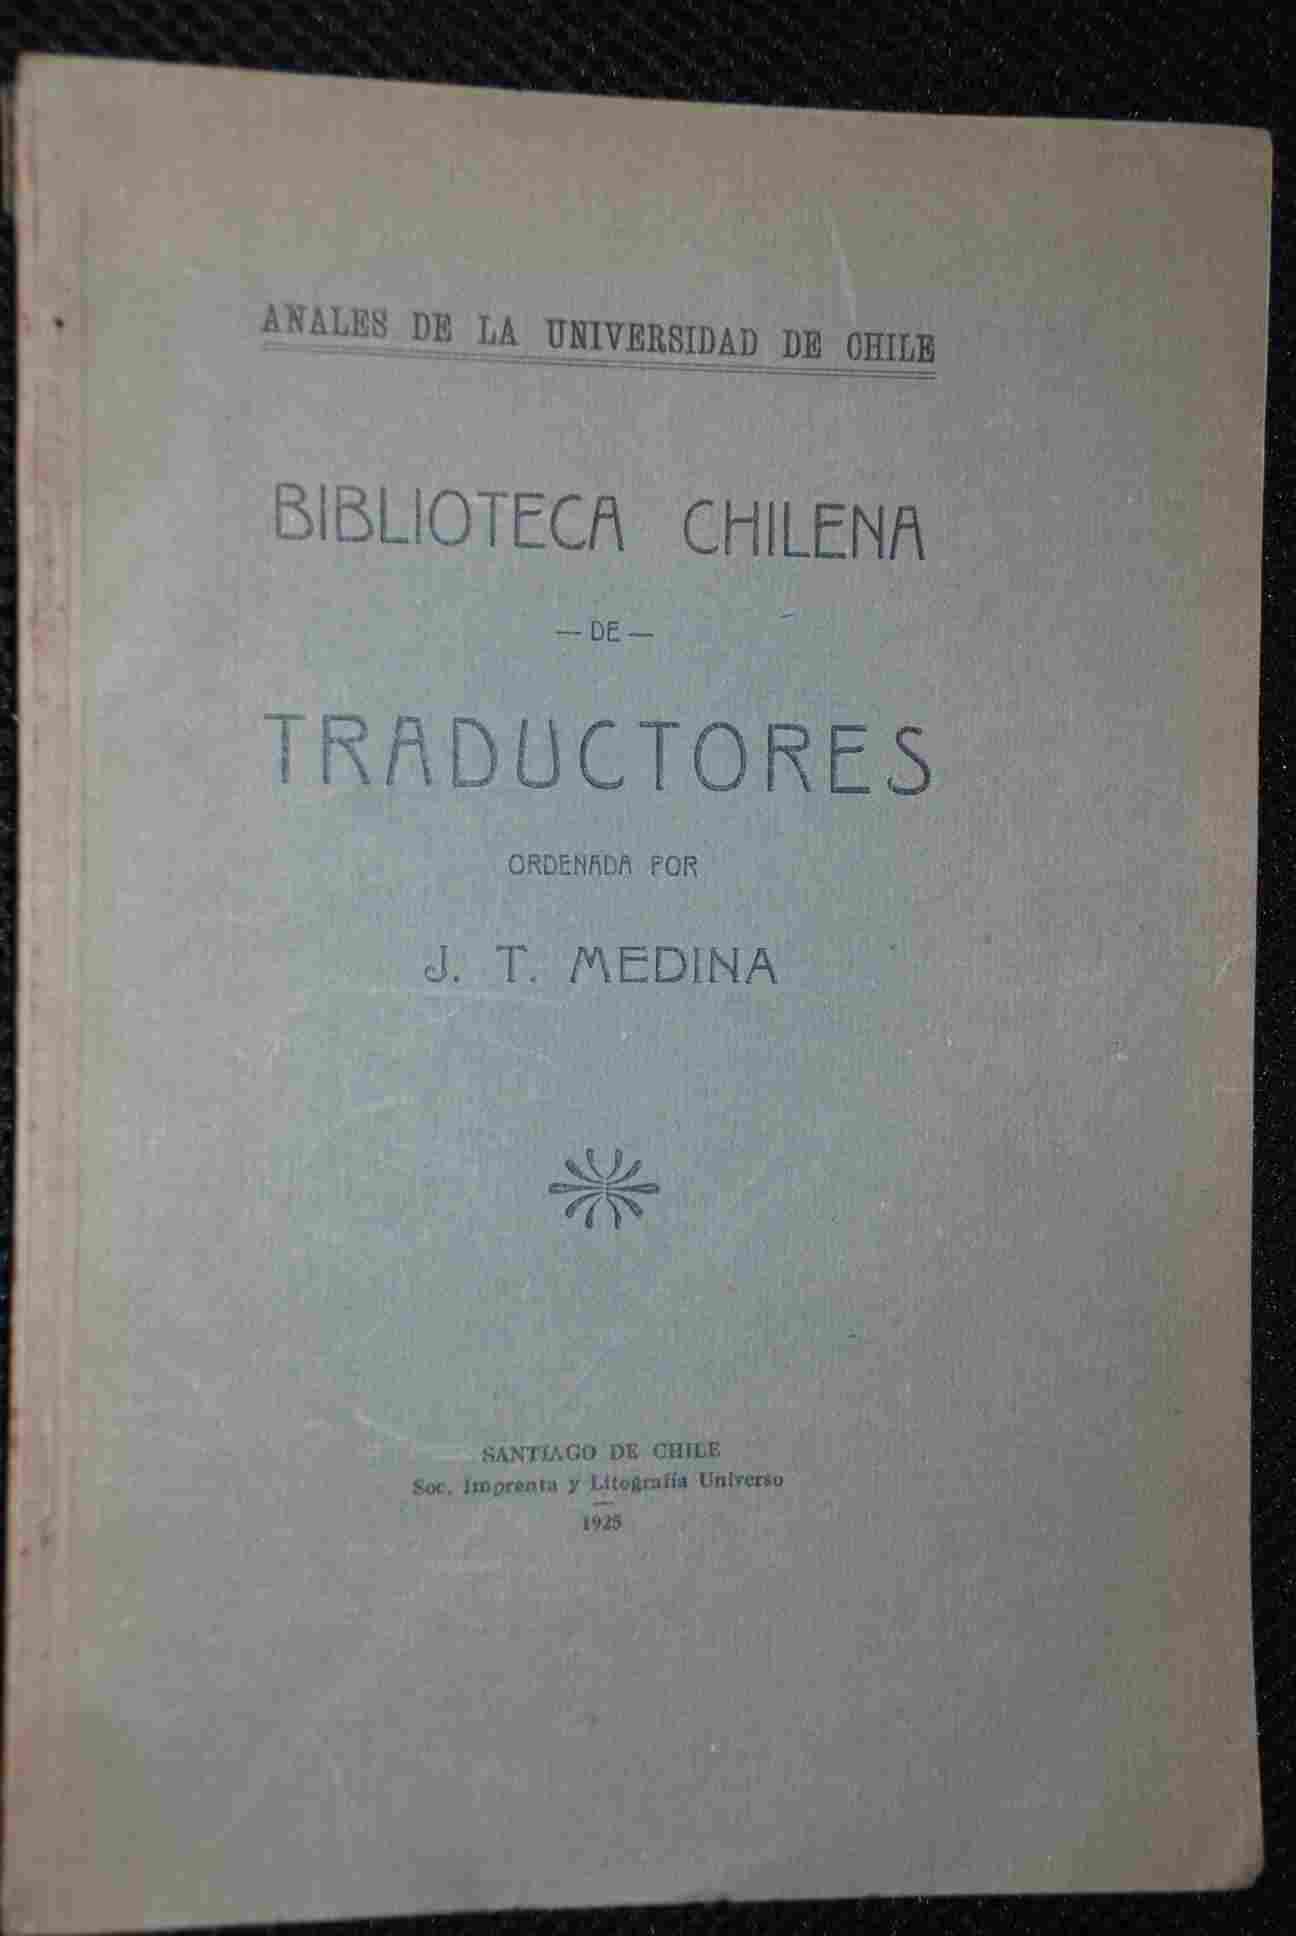 Jose Toribio Medina - Biblioteca Chilena de Traductores